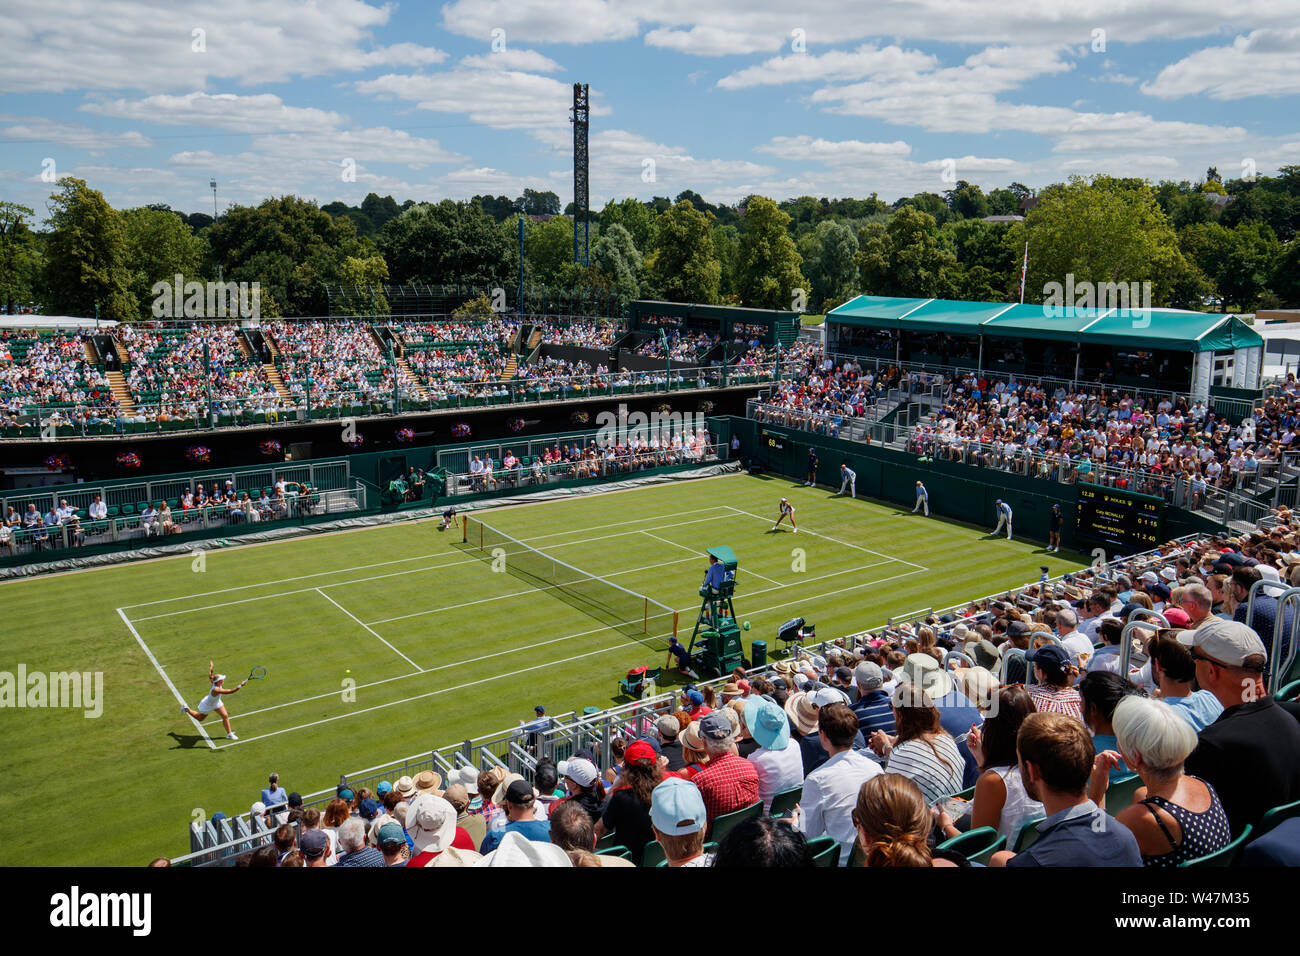 View court 12 wimbledon tennis hi-res stock photography and images - Alamy